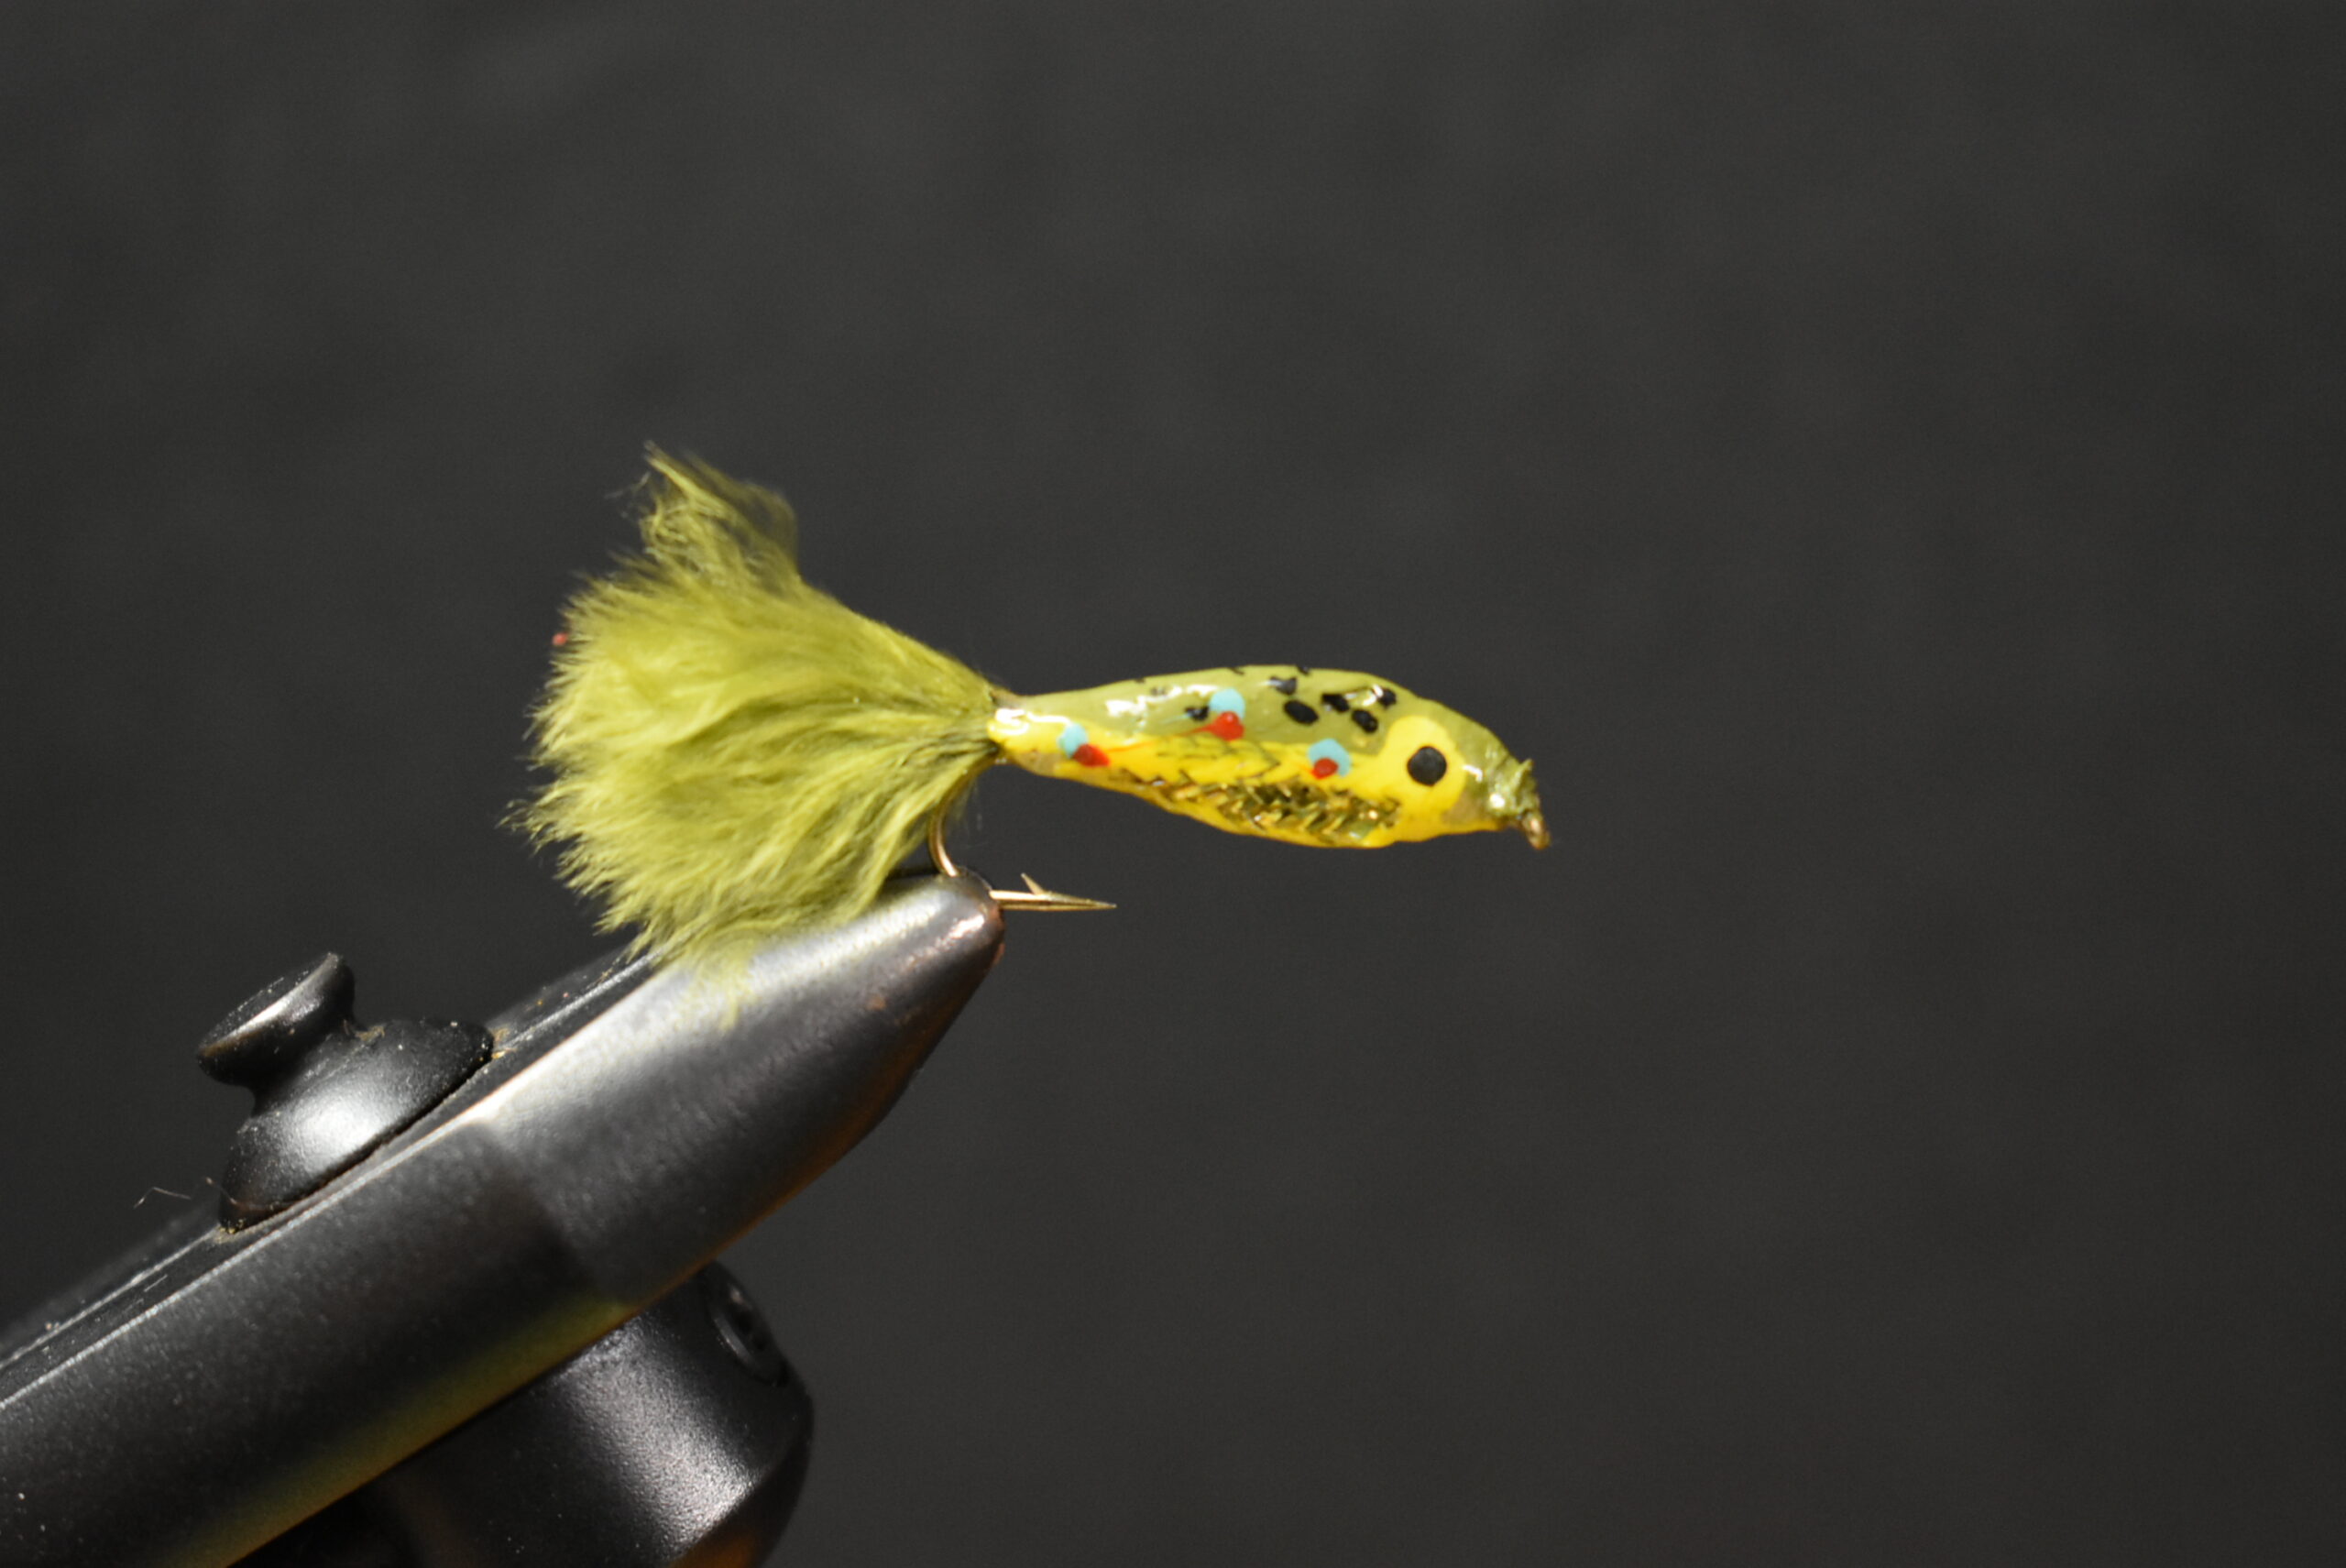 2 Flies, Size 10, Brook Trout Epoxy Minnow Fly Fishing Flies - Lady Fly Tyer